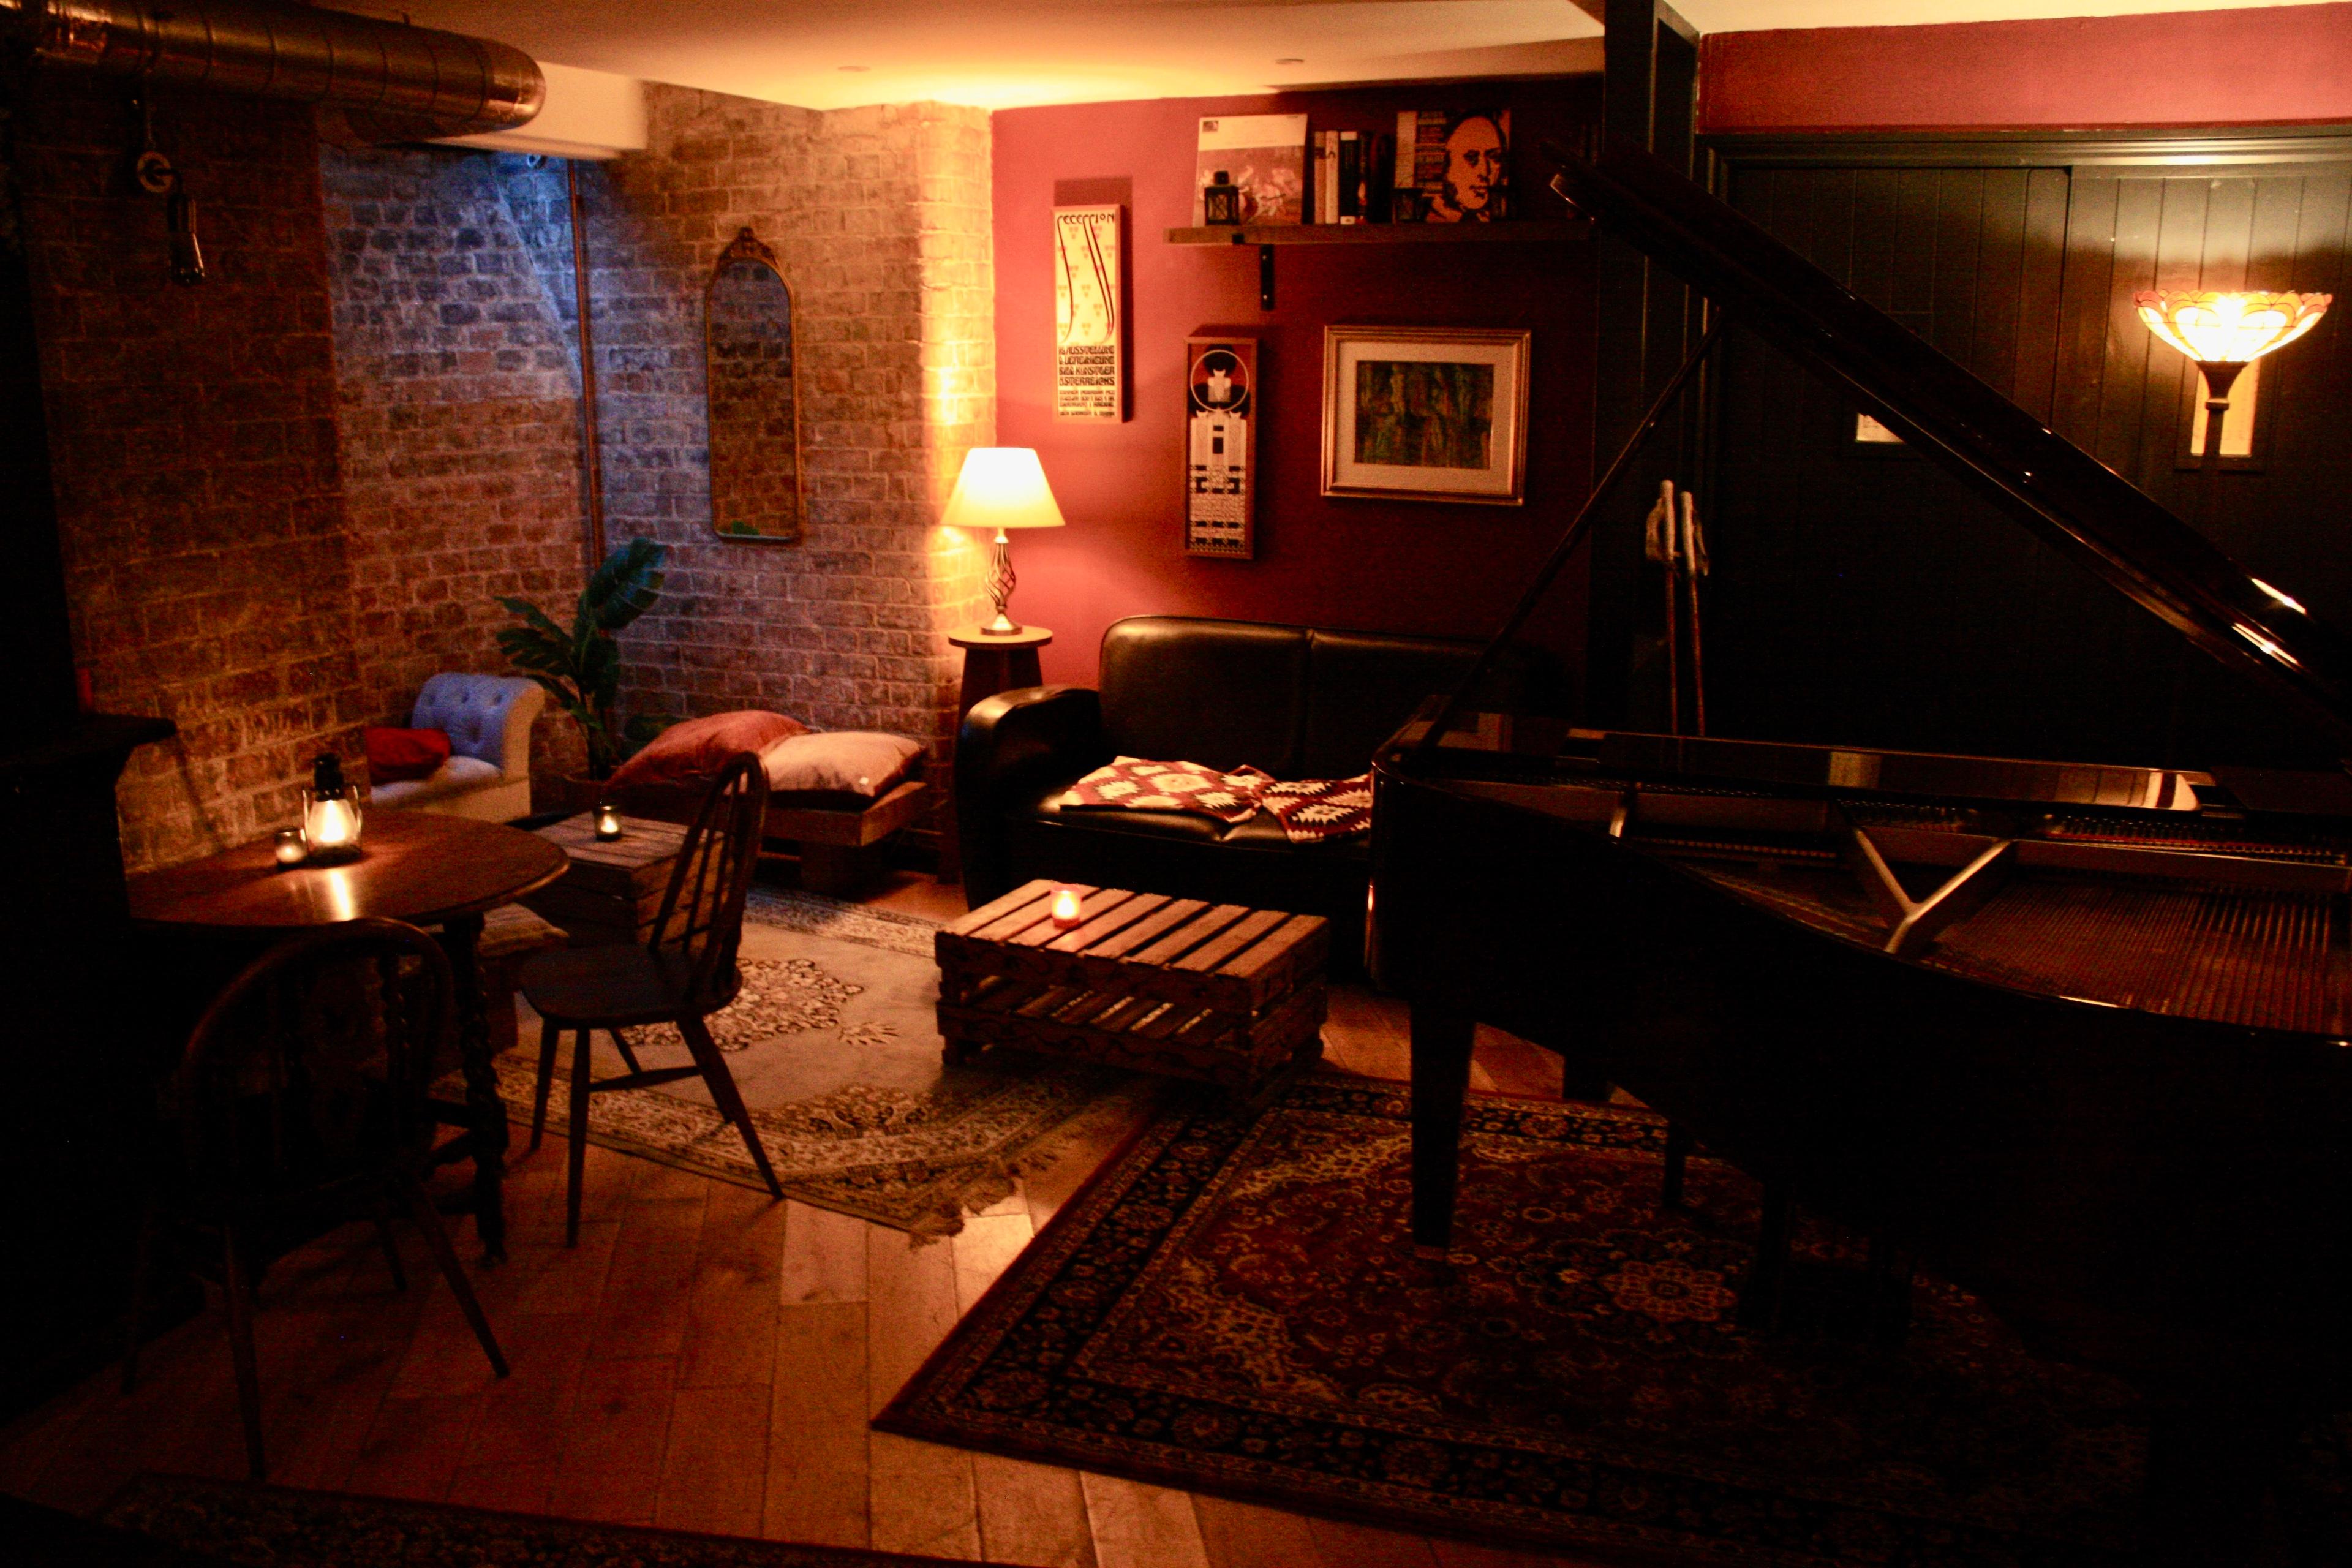 Fidelio Cafe, The Lounge photo #1